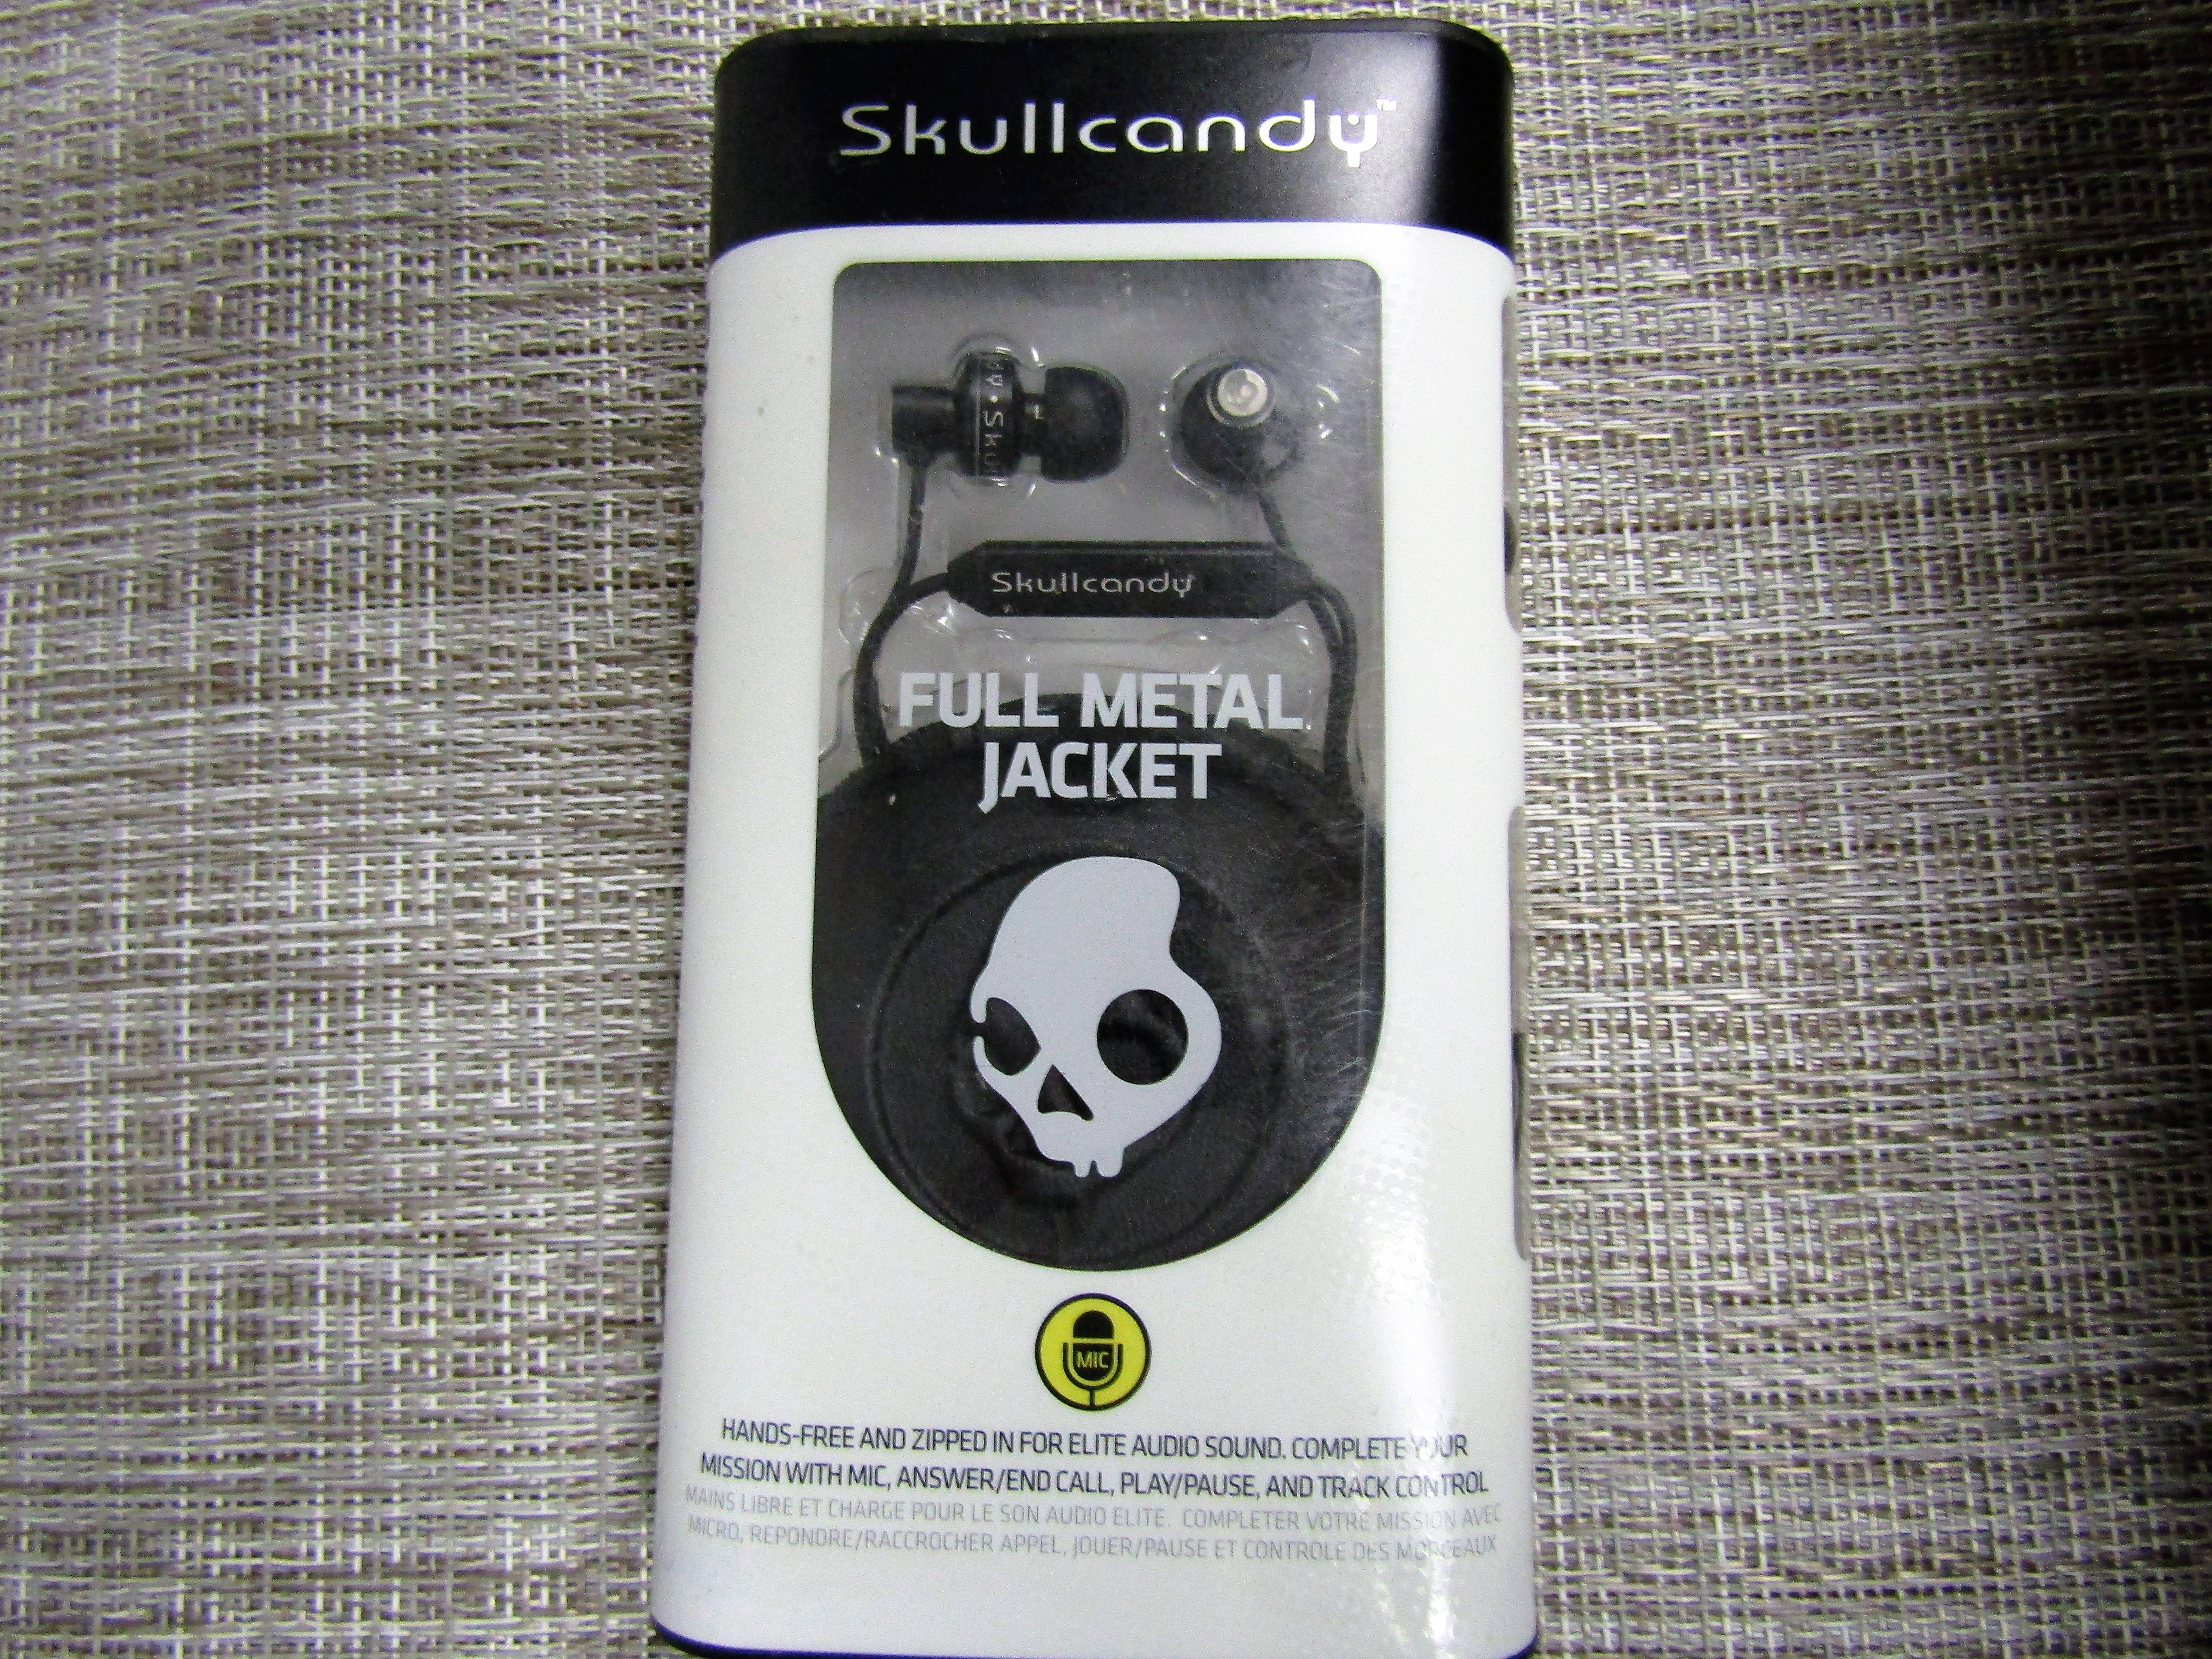 Skullcandy Full Metal Jacket earphones - image 1 of 1